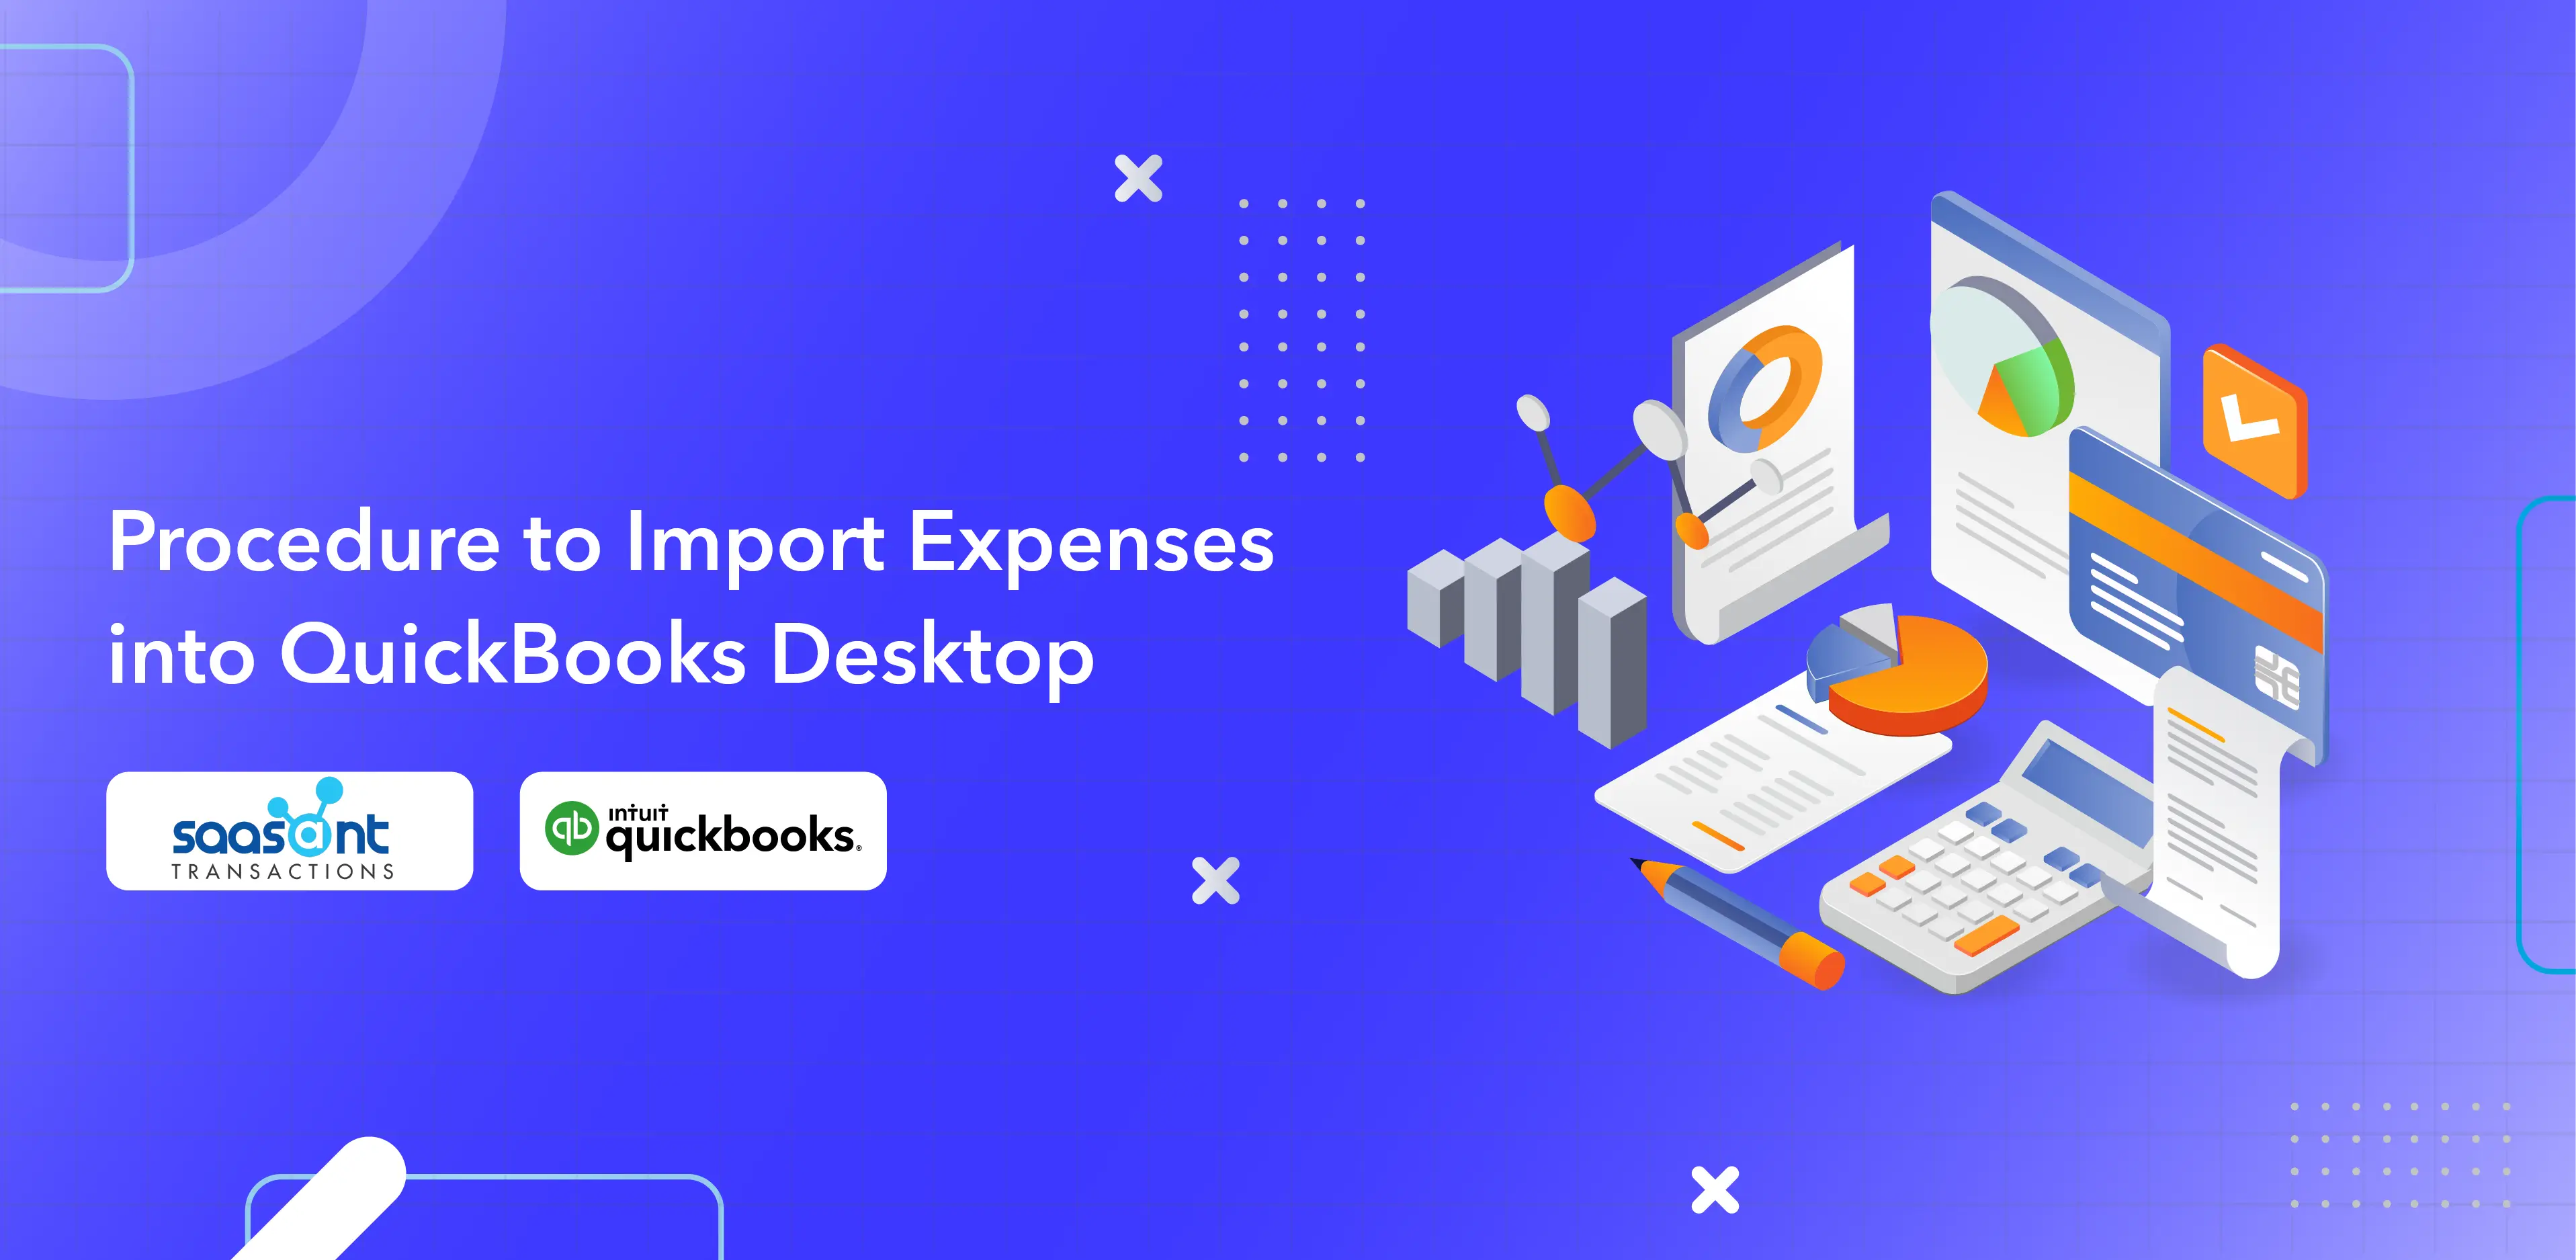 Procedure To Import Expenses Into Quickbooks Desktop 0492